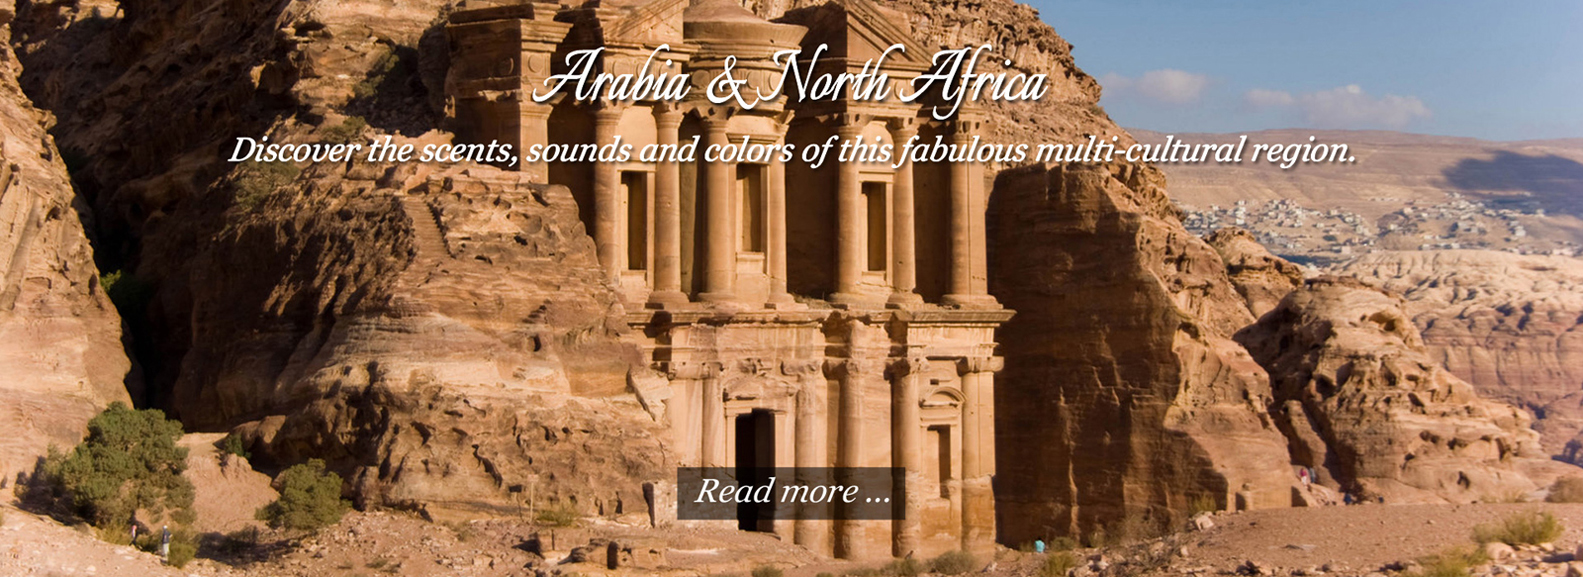 Arabia & North Africa